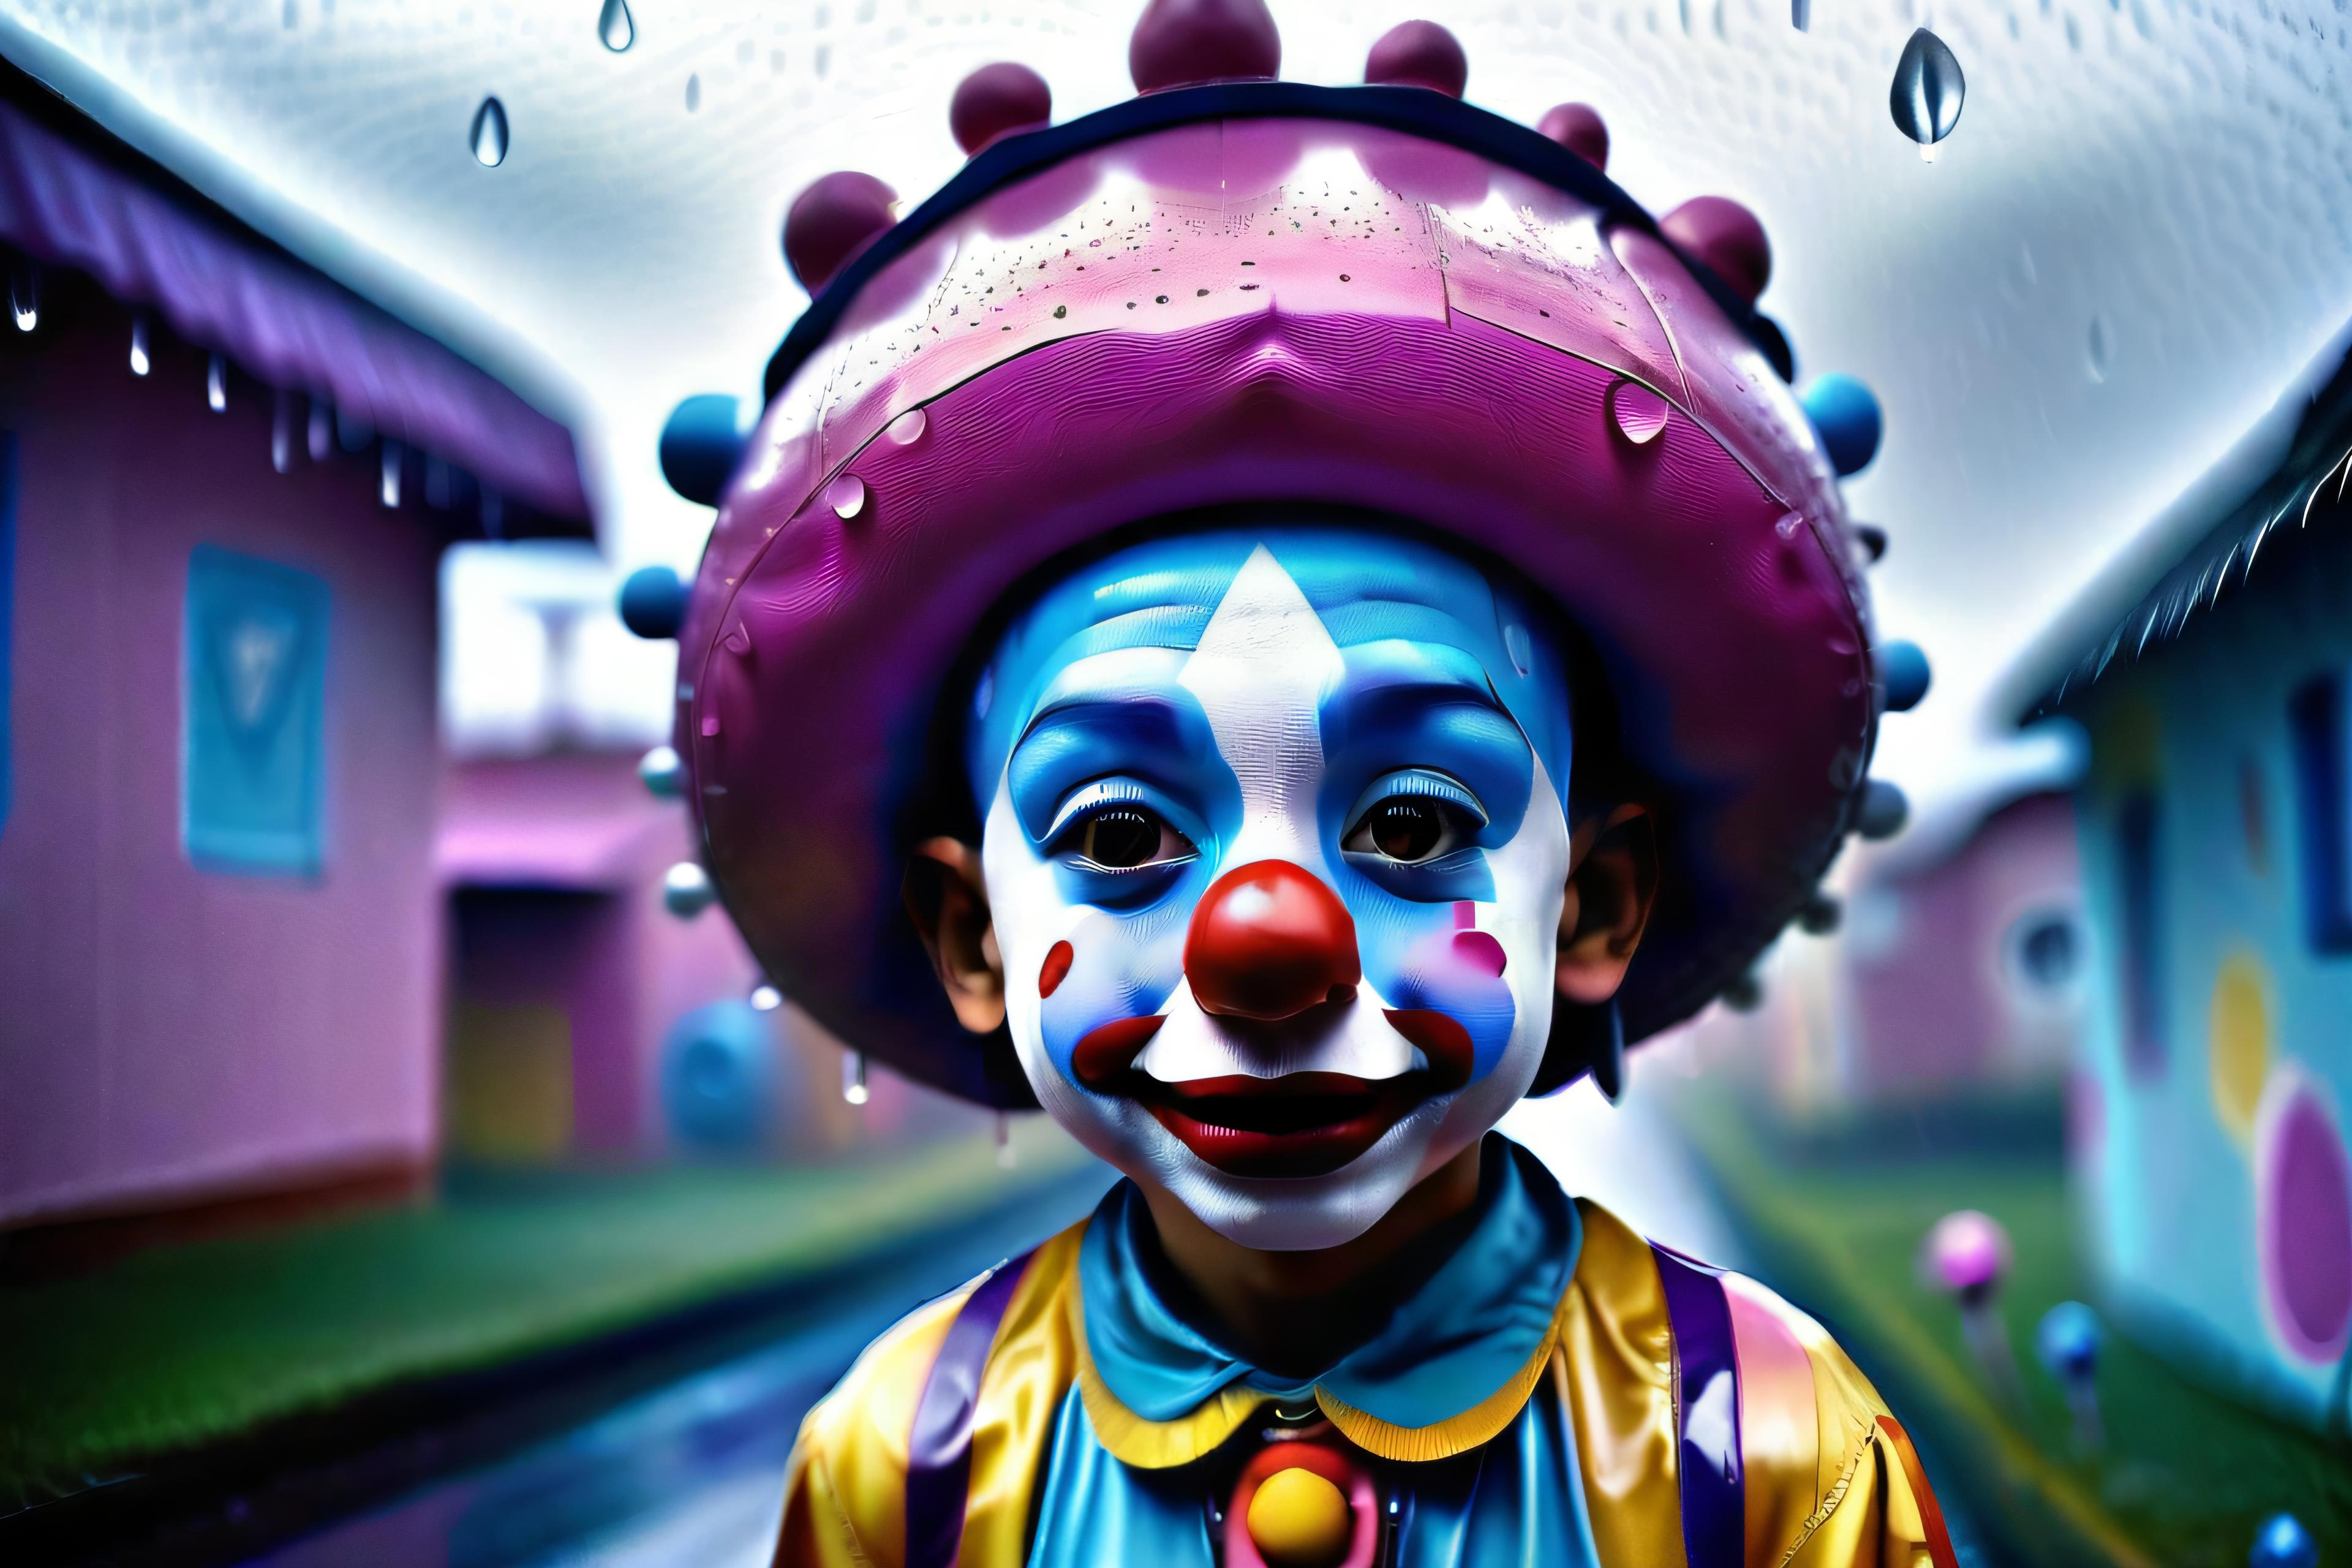 Clown Boy image by patricktoba